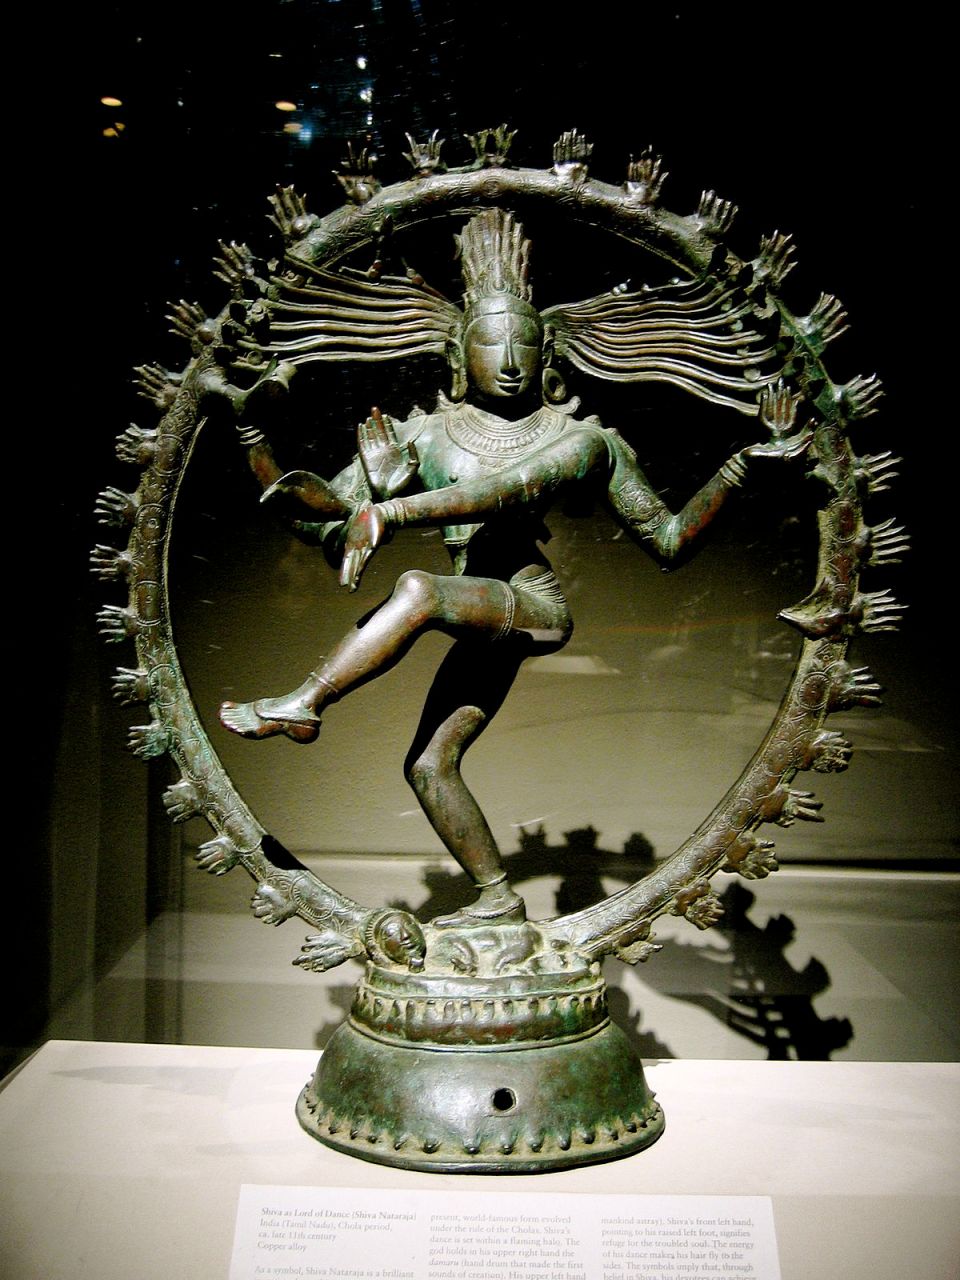 The bronze dancing figure of Shiva or Nataraja